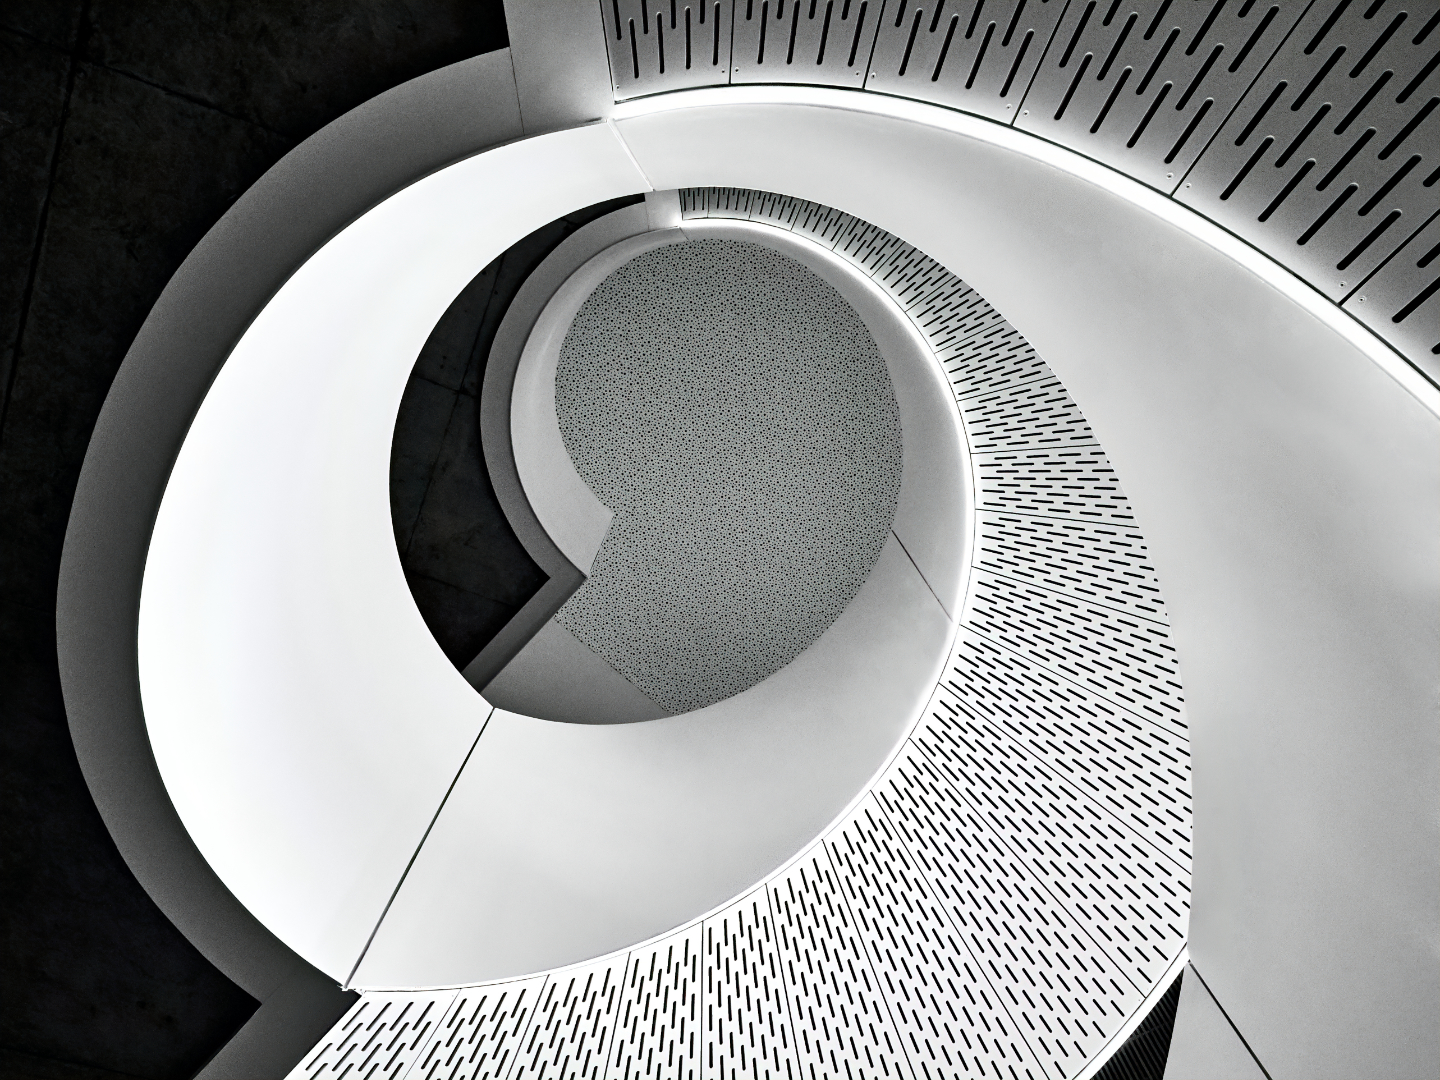 Mark Stevens Stretton Stairway Top Merit May 2019   Architecture